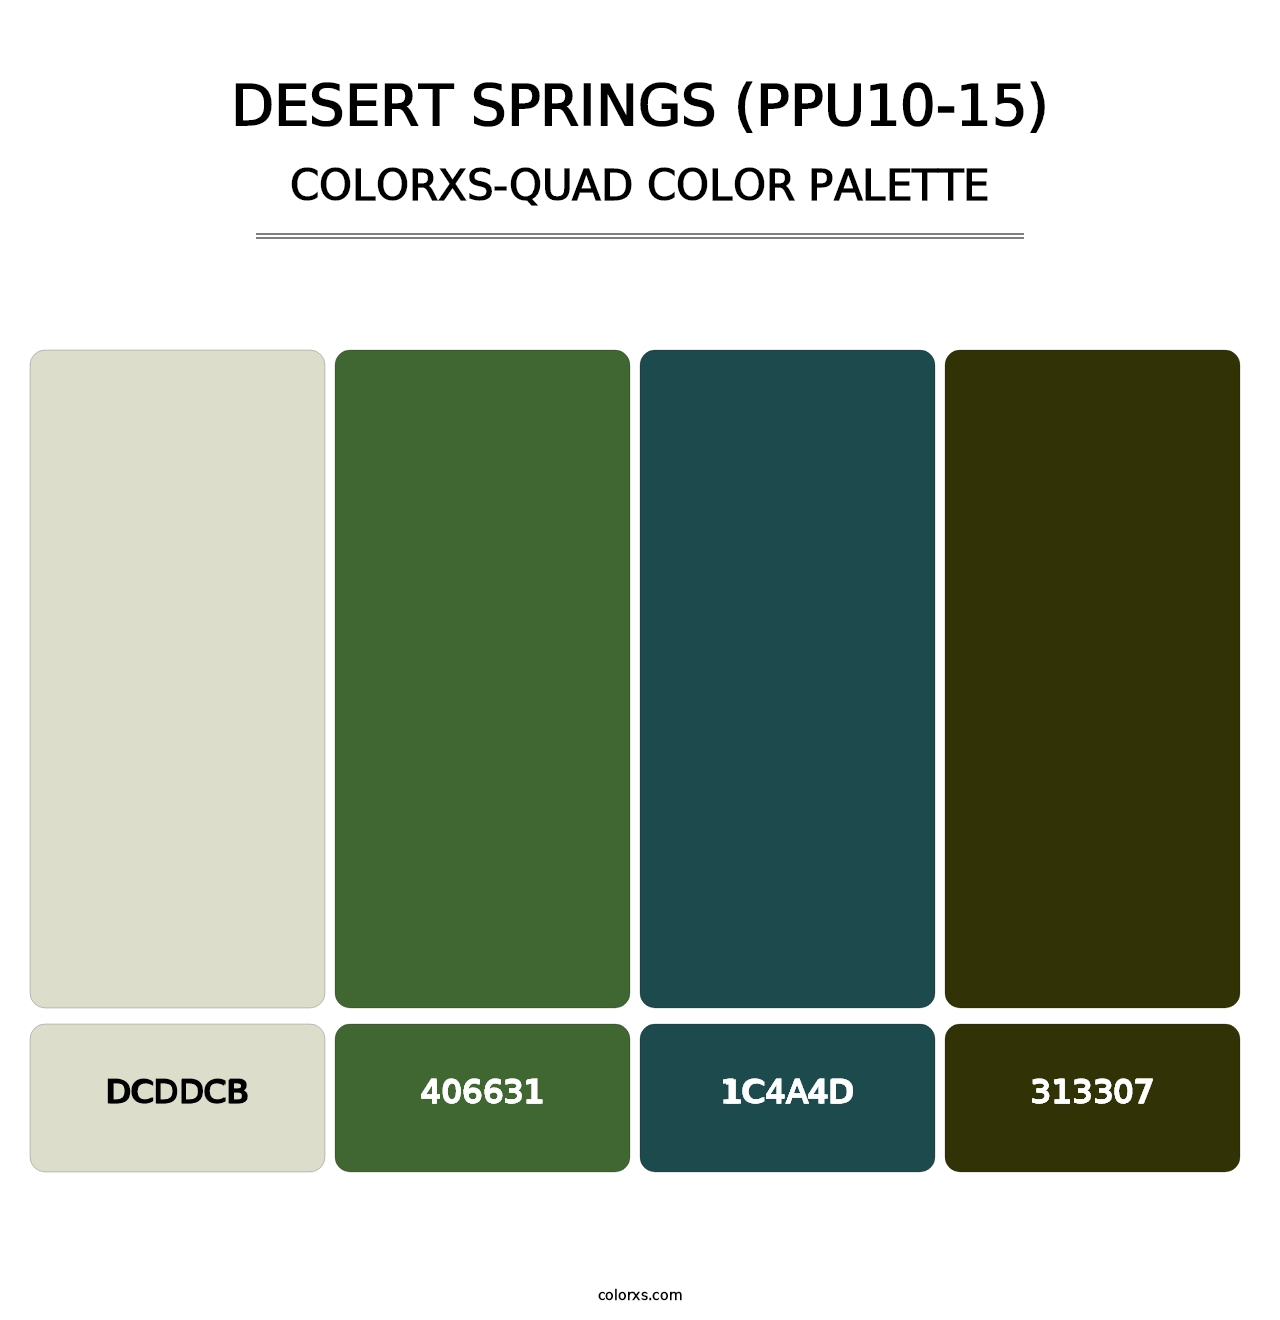 Desert Springs (PPU10-15) - Colorxs Quad Palette